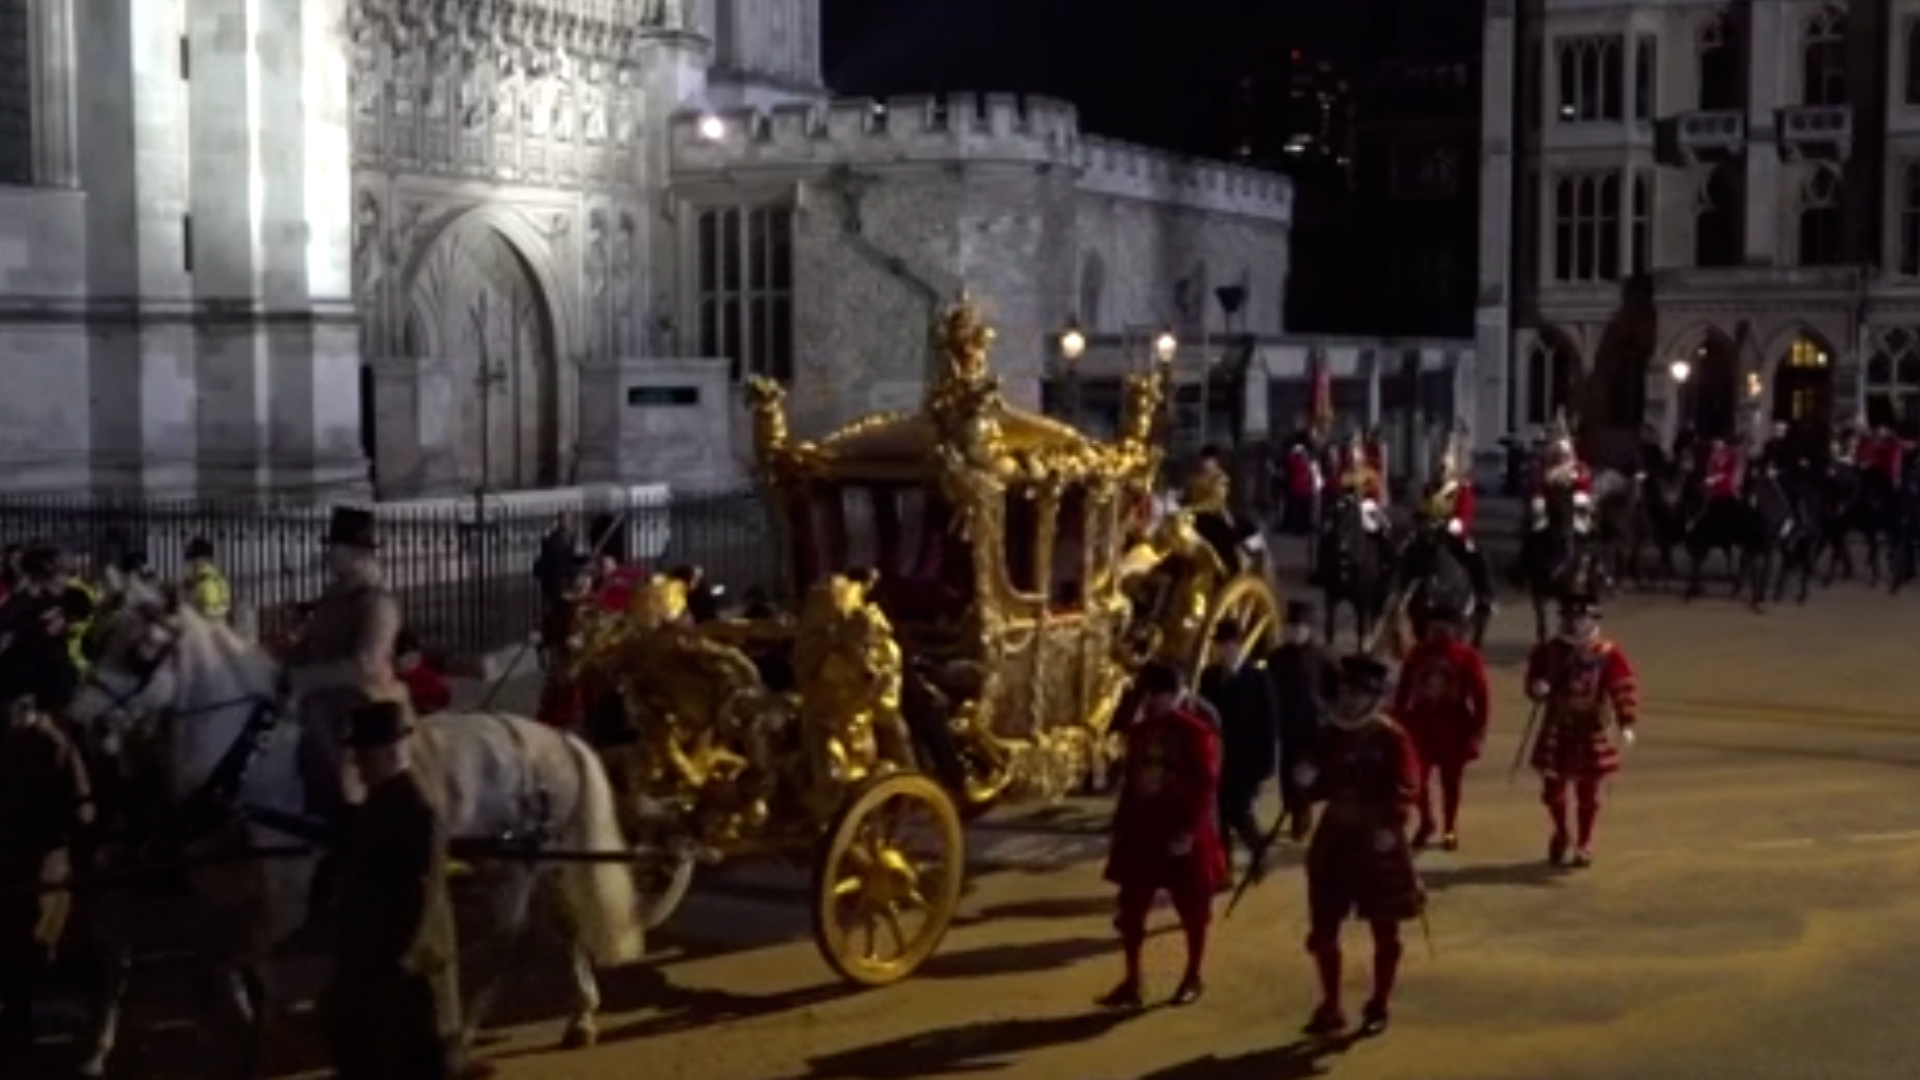 King Charles noisy nighttime Coronation rehearsal keeps Londoners awake